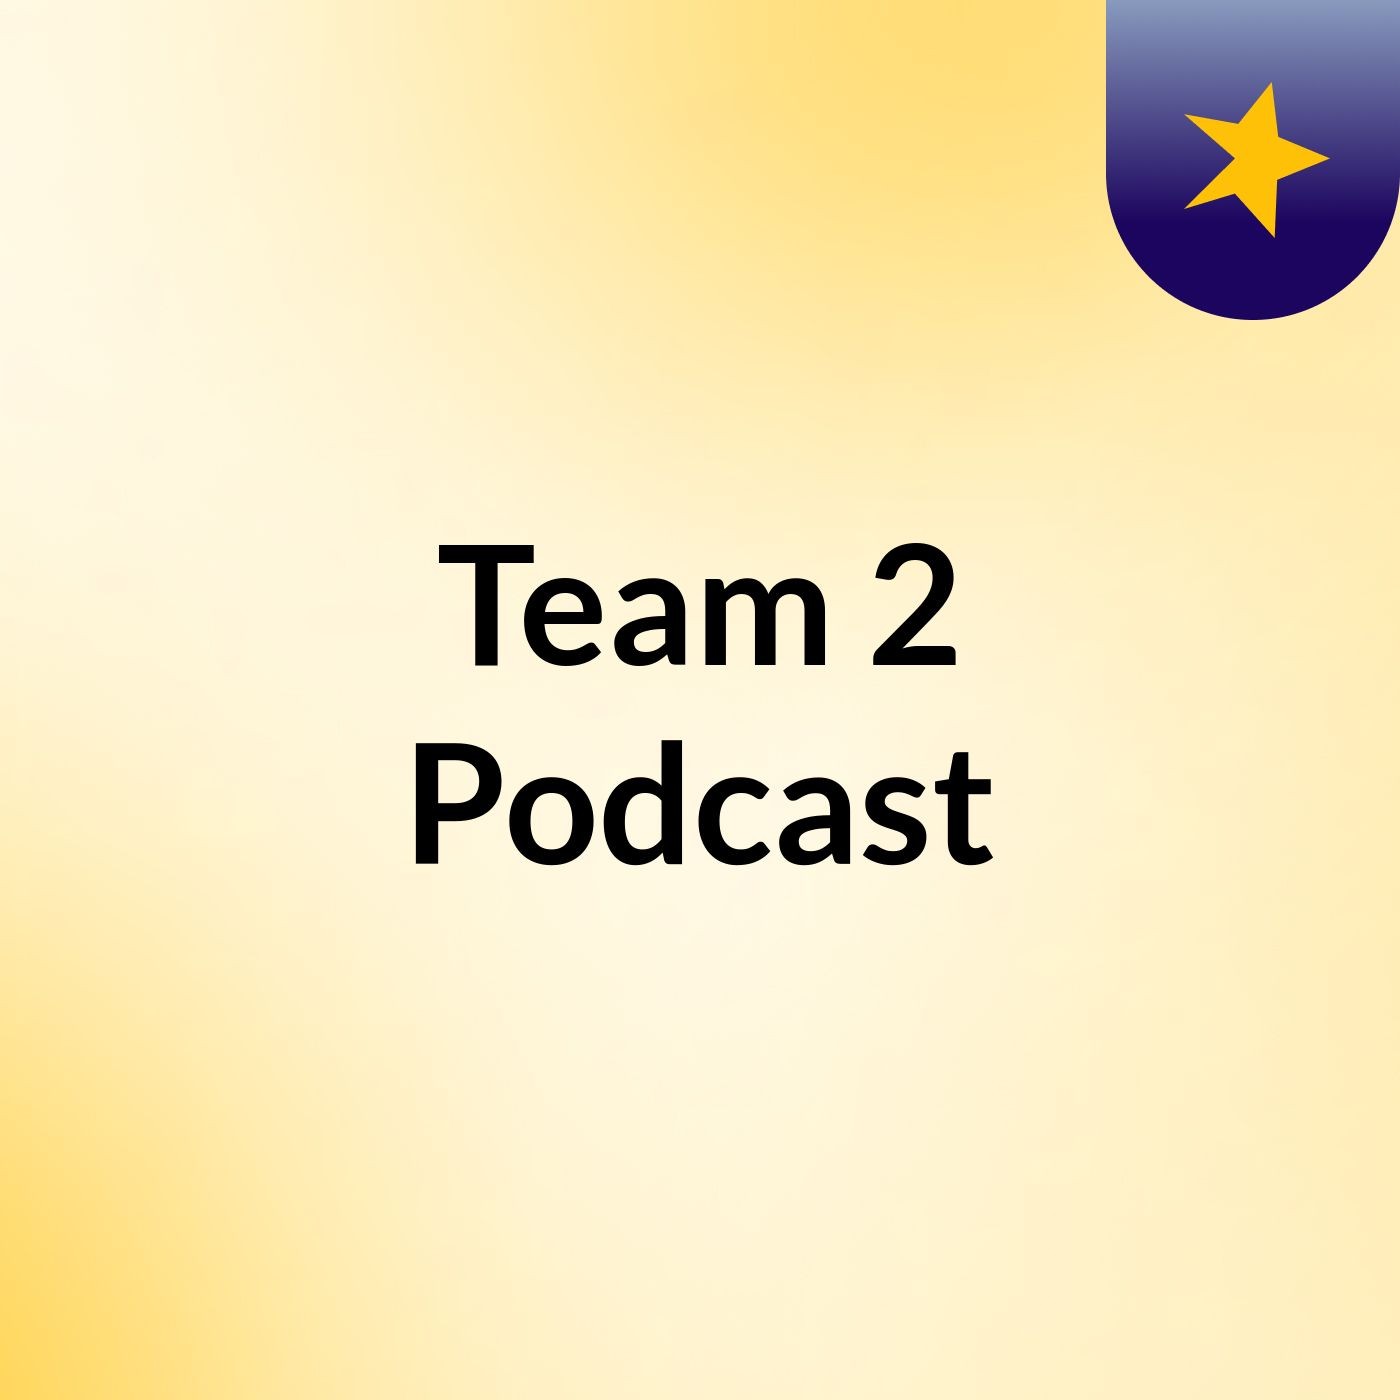 Team 2 Podcast